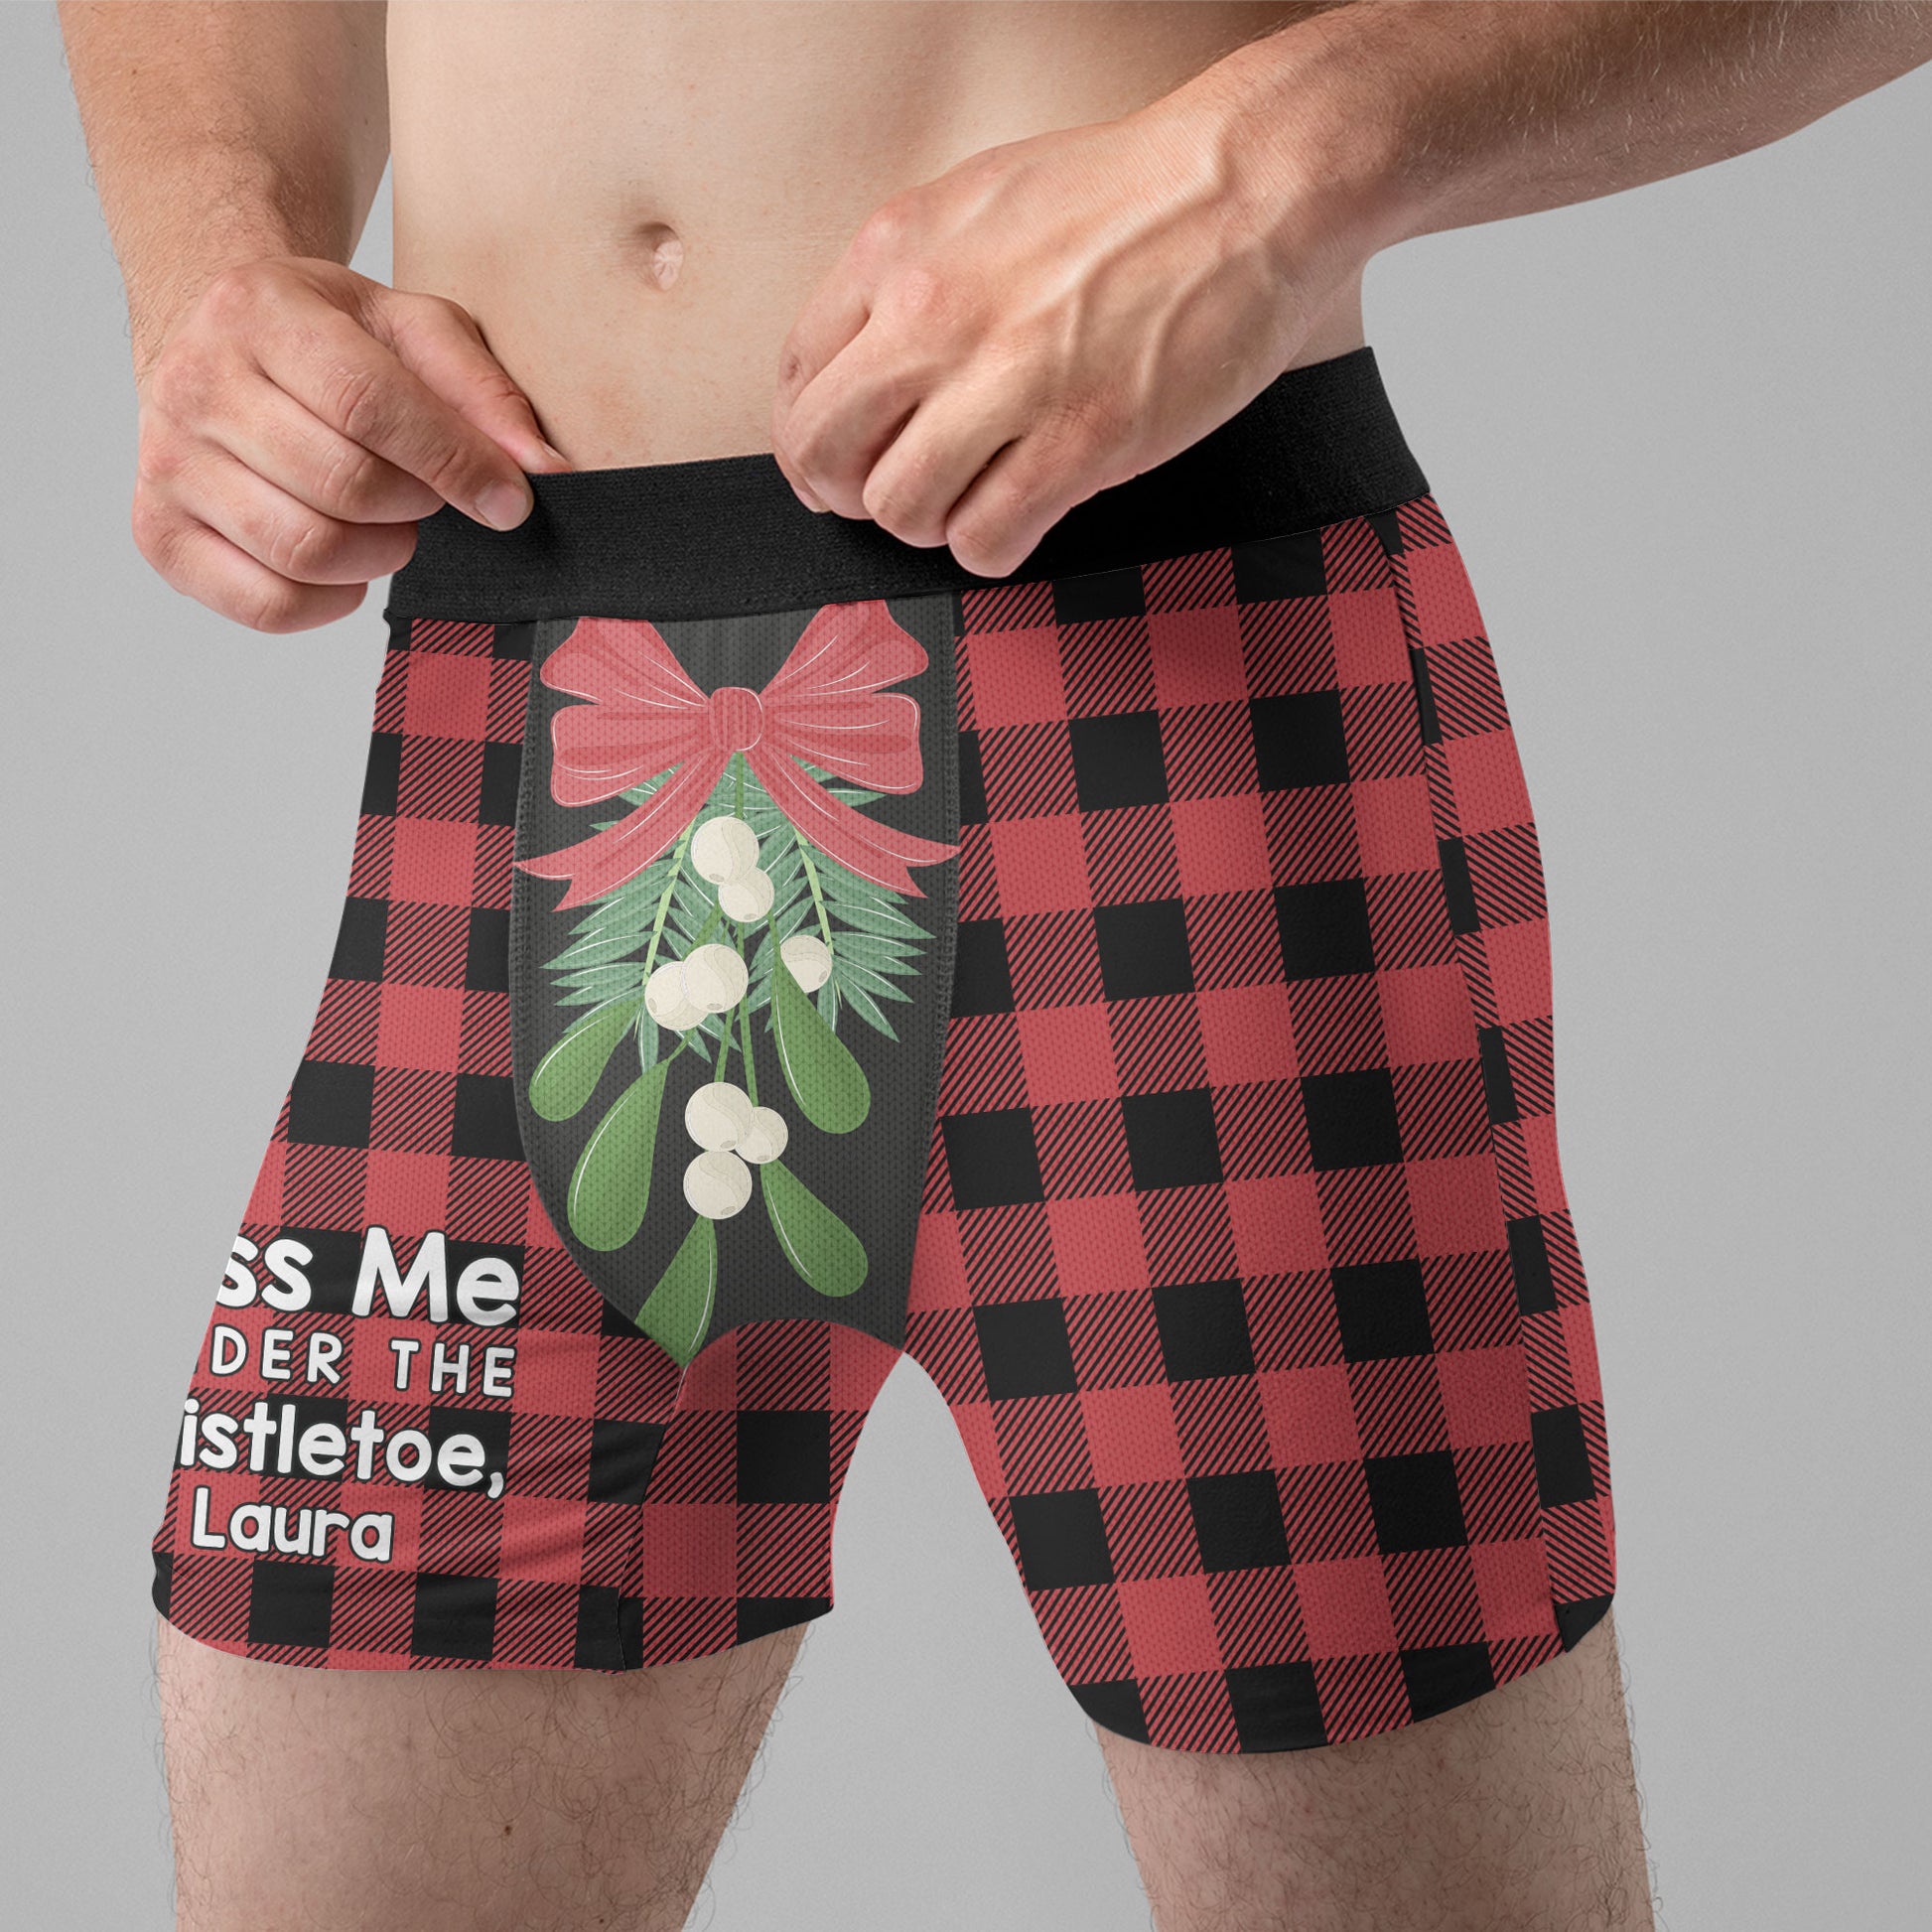 Kiss Me Under The Mistletoe Funny - Personalized Men's Boxer